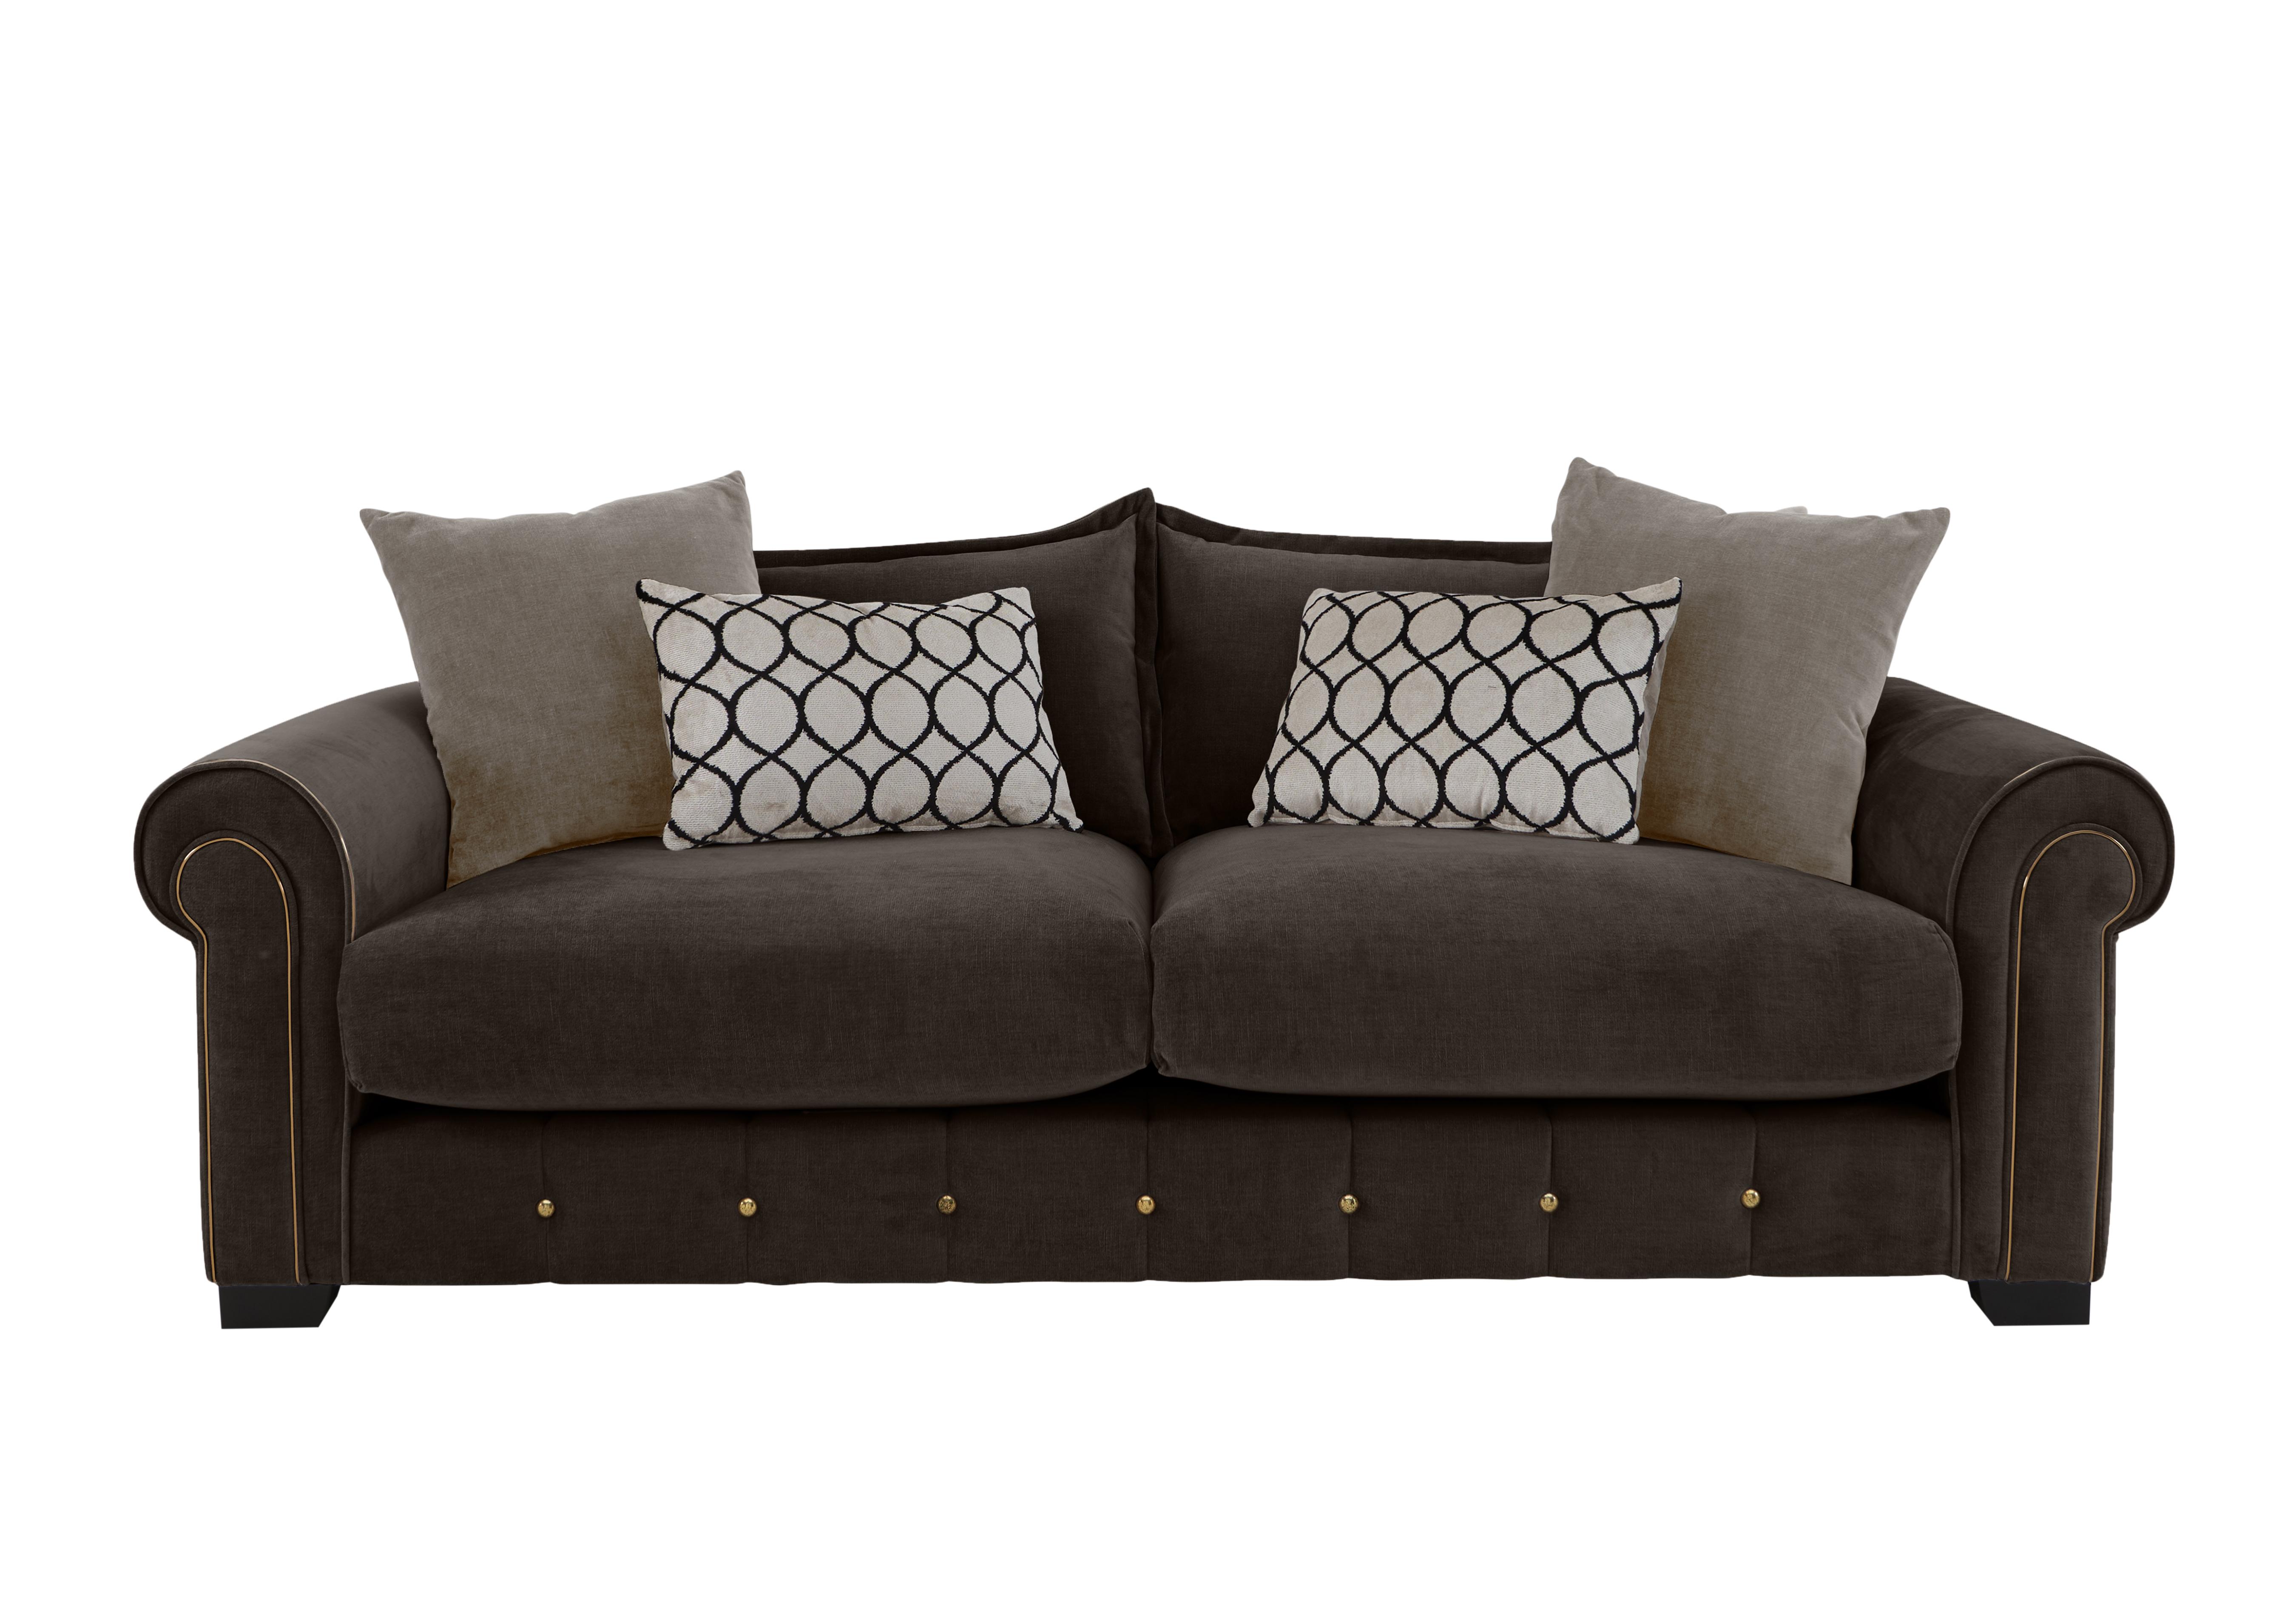 Sumptuous 4 Seater Fabric Sofa in Chamonix Mocha Dk/Gold on Furniture Village